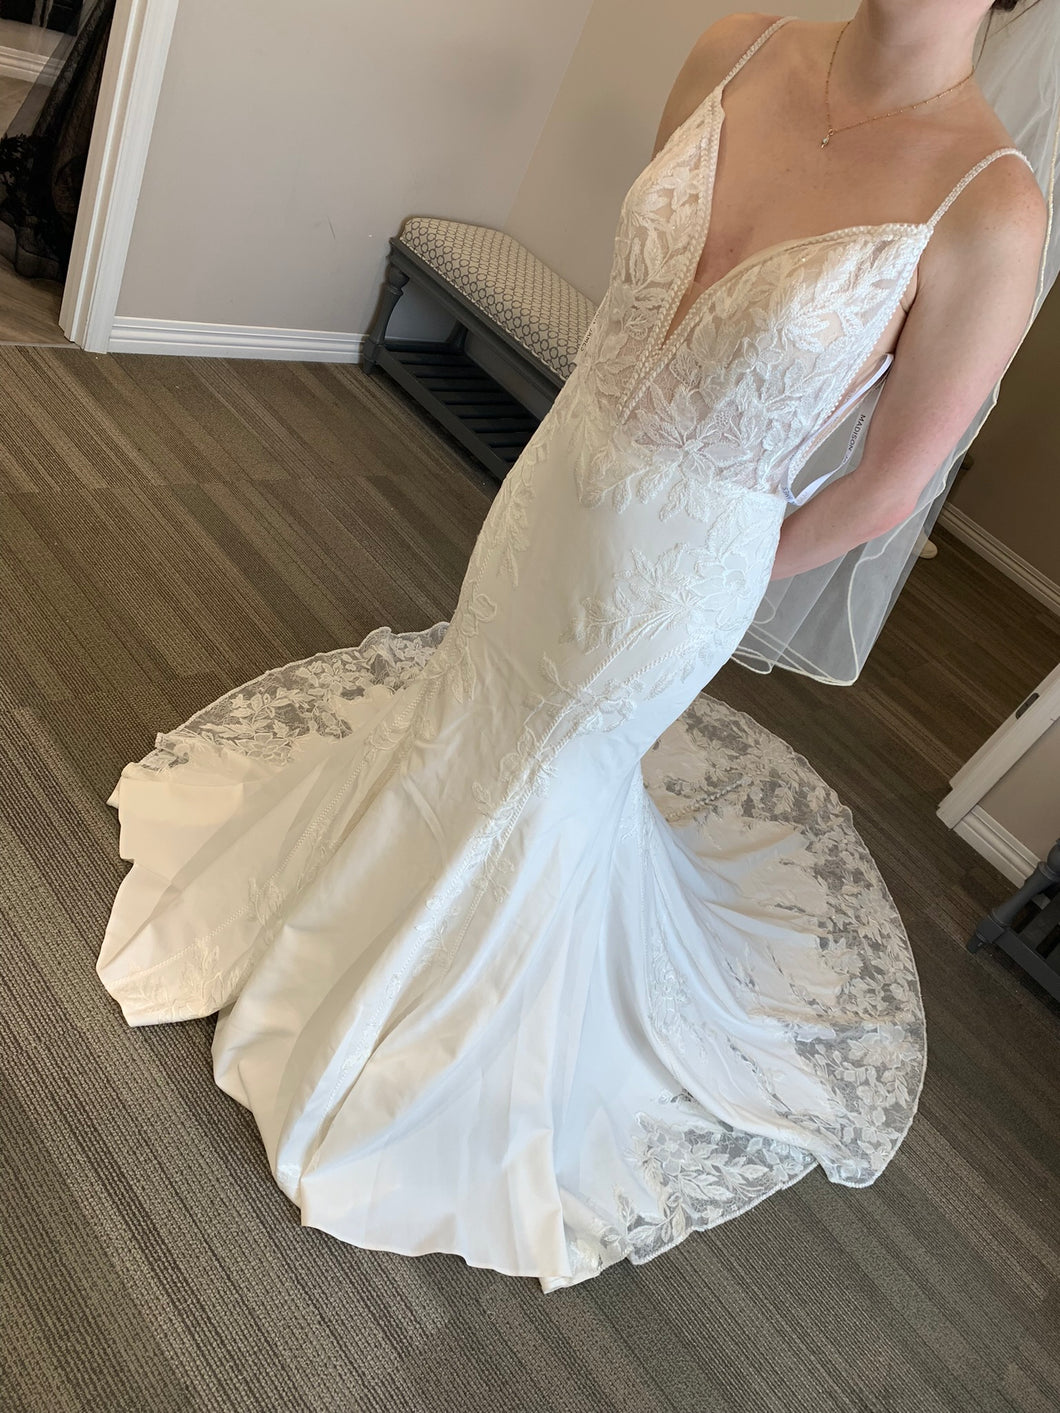 Allure Bridals 'MJ751 Mina Allure-Madison James' wedding dress size-04 NEW